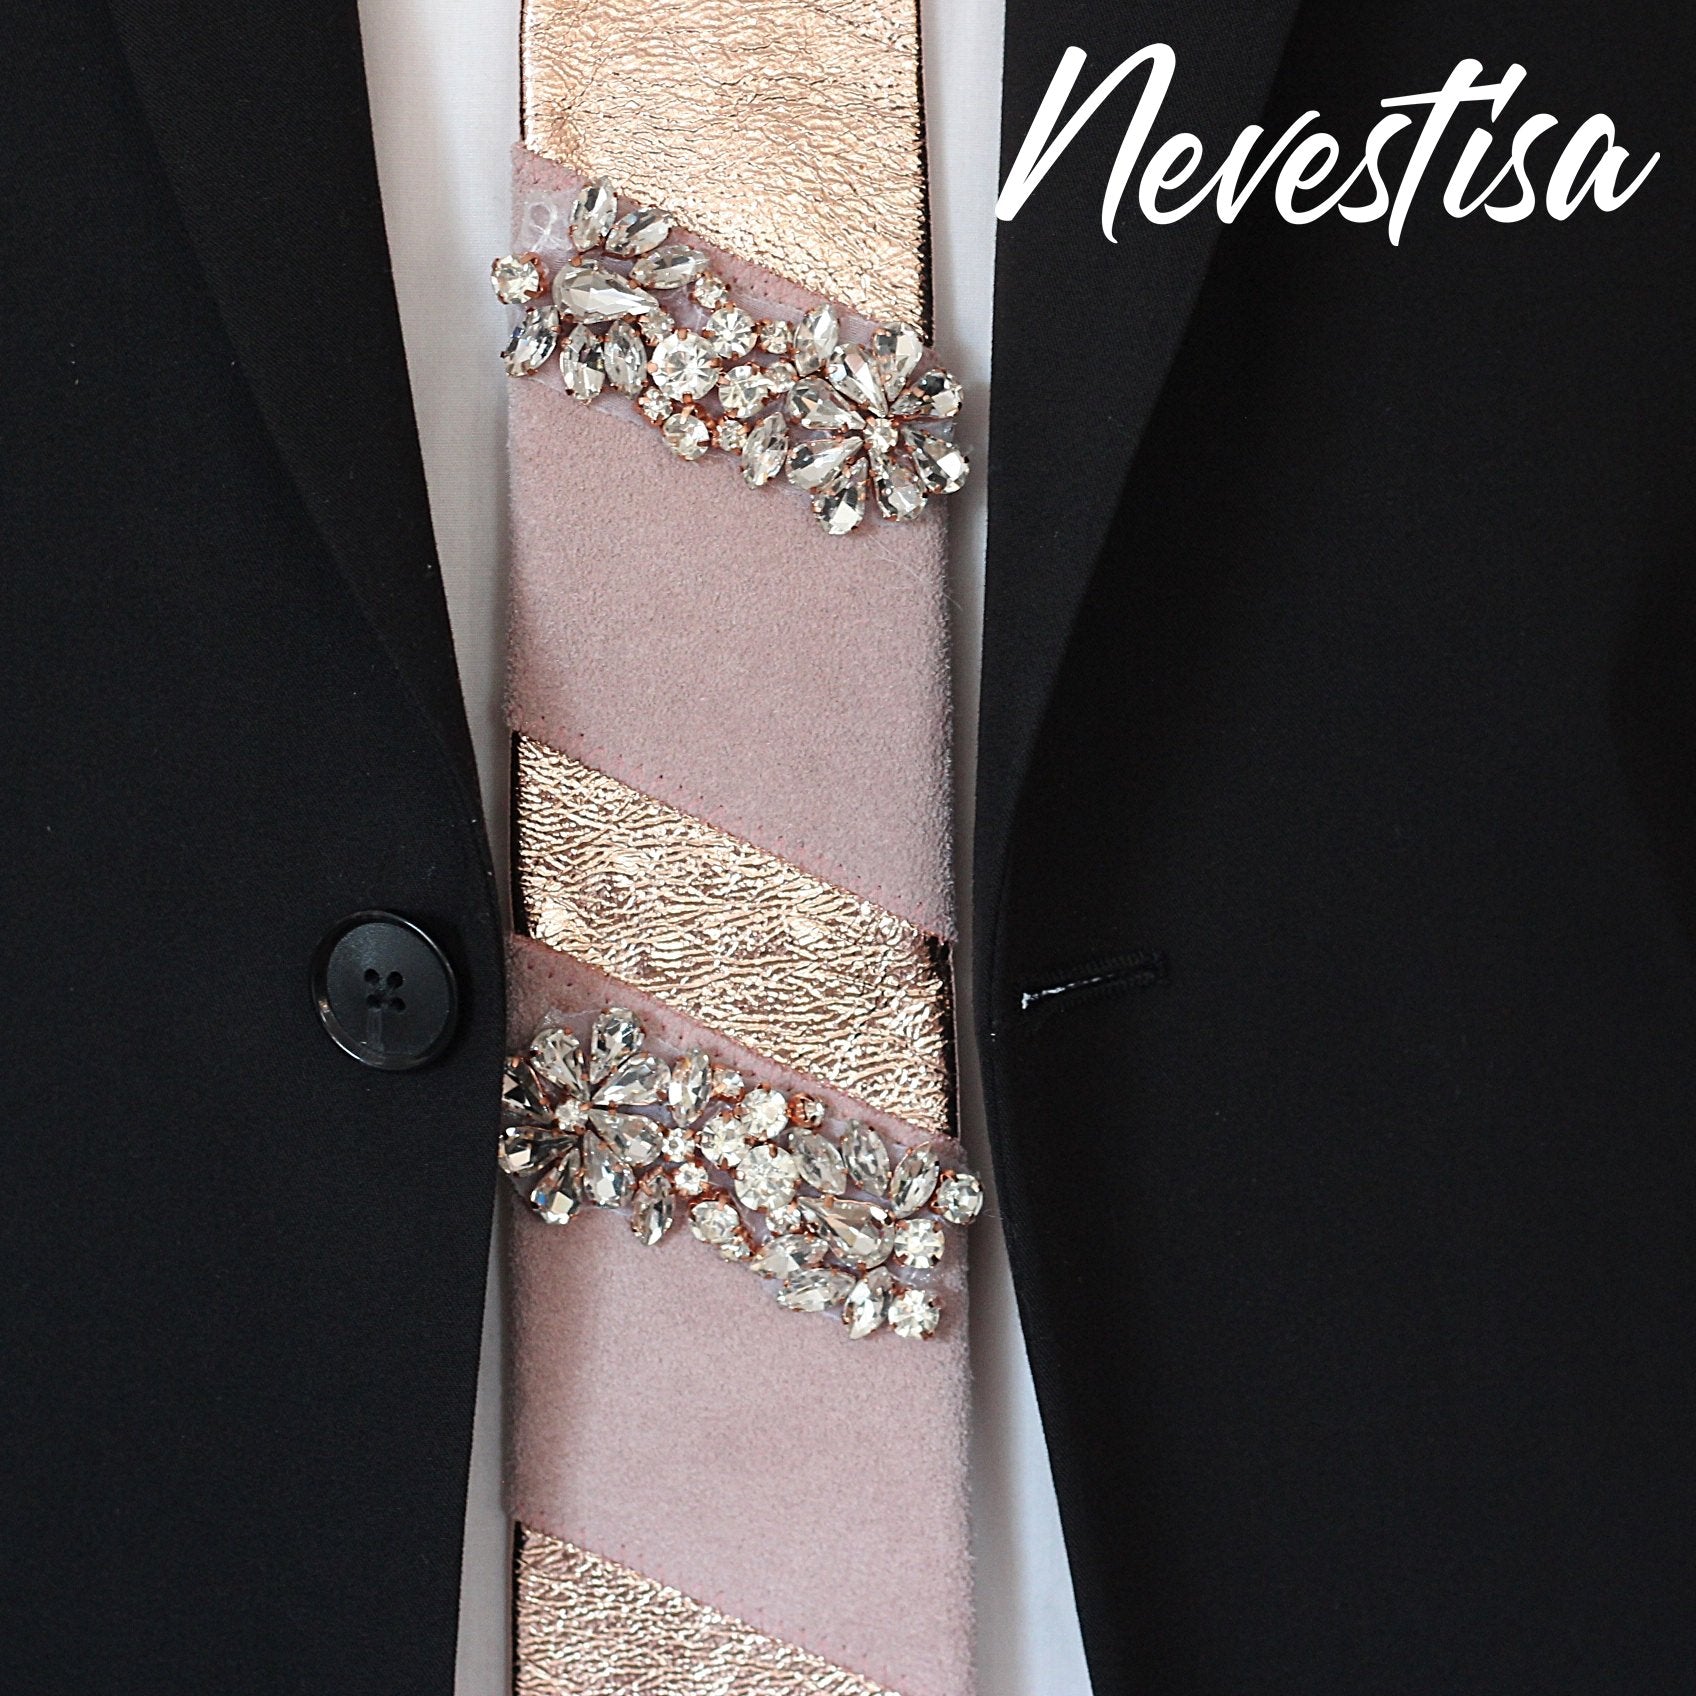 Blush Pink Satin Tie, Necktie with Geometric Rose Gold Rhinestones Pattern